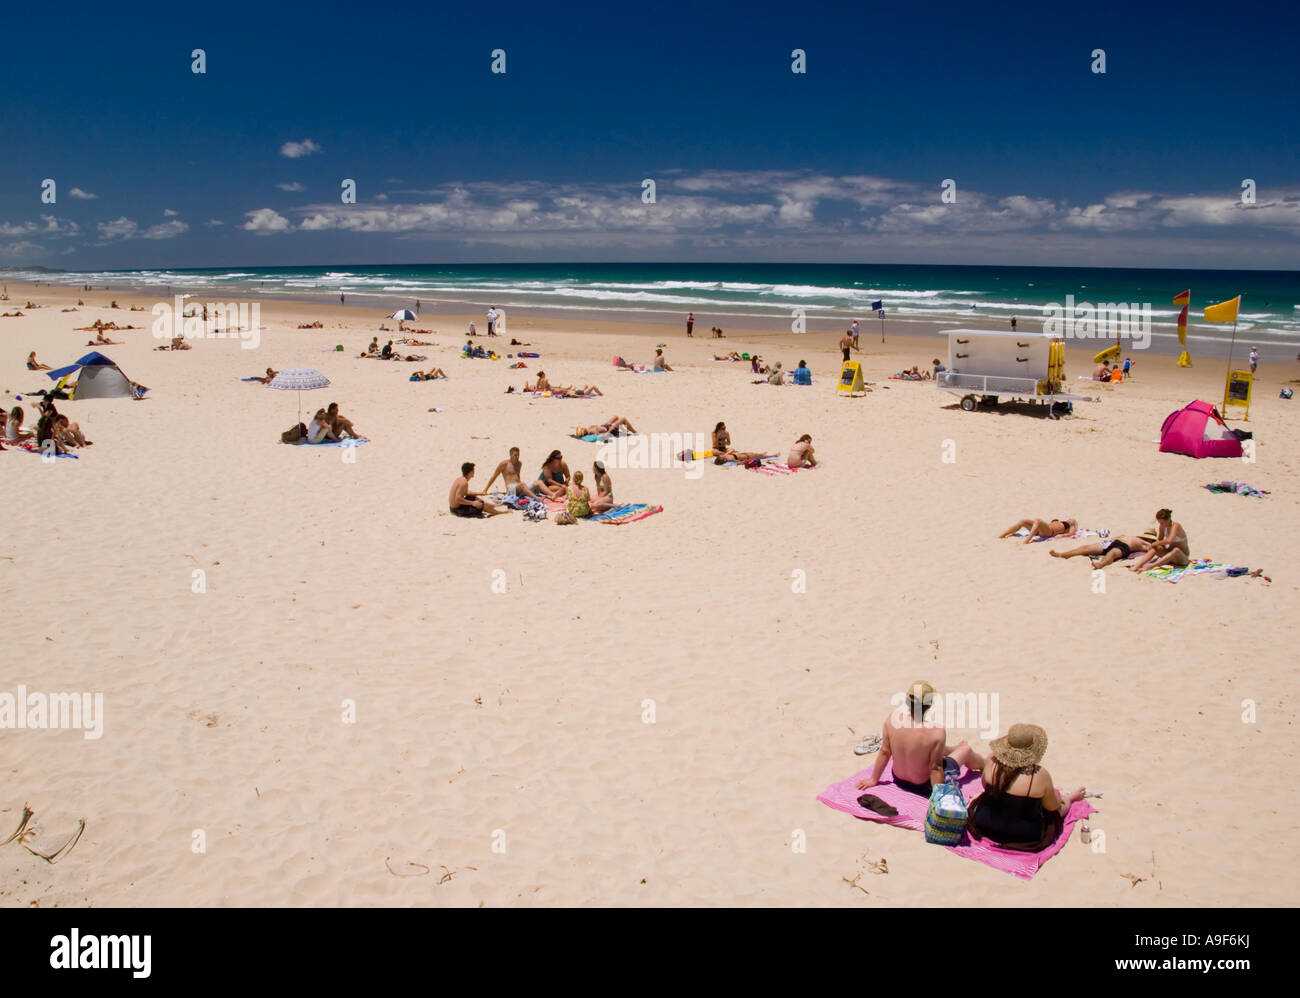 A crowded Bondi Beach, Australia Stock Photo - Alamy